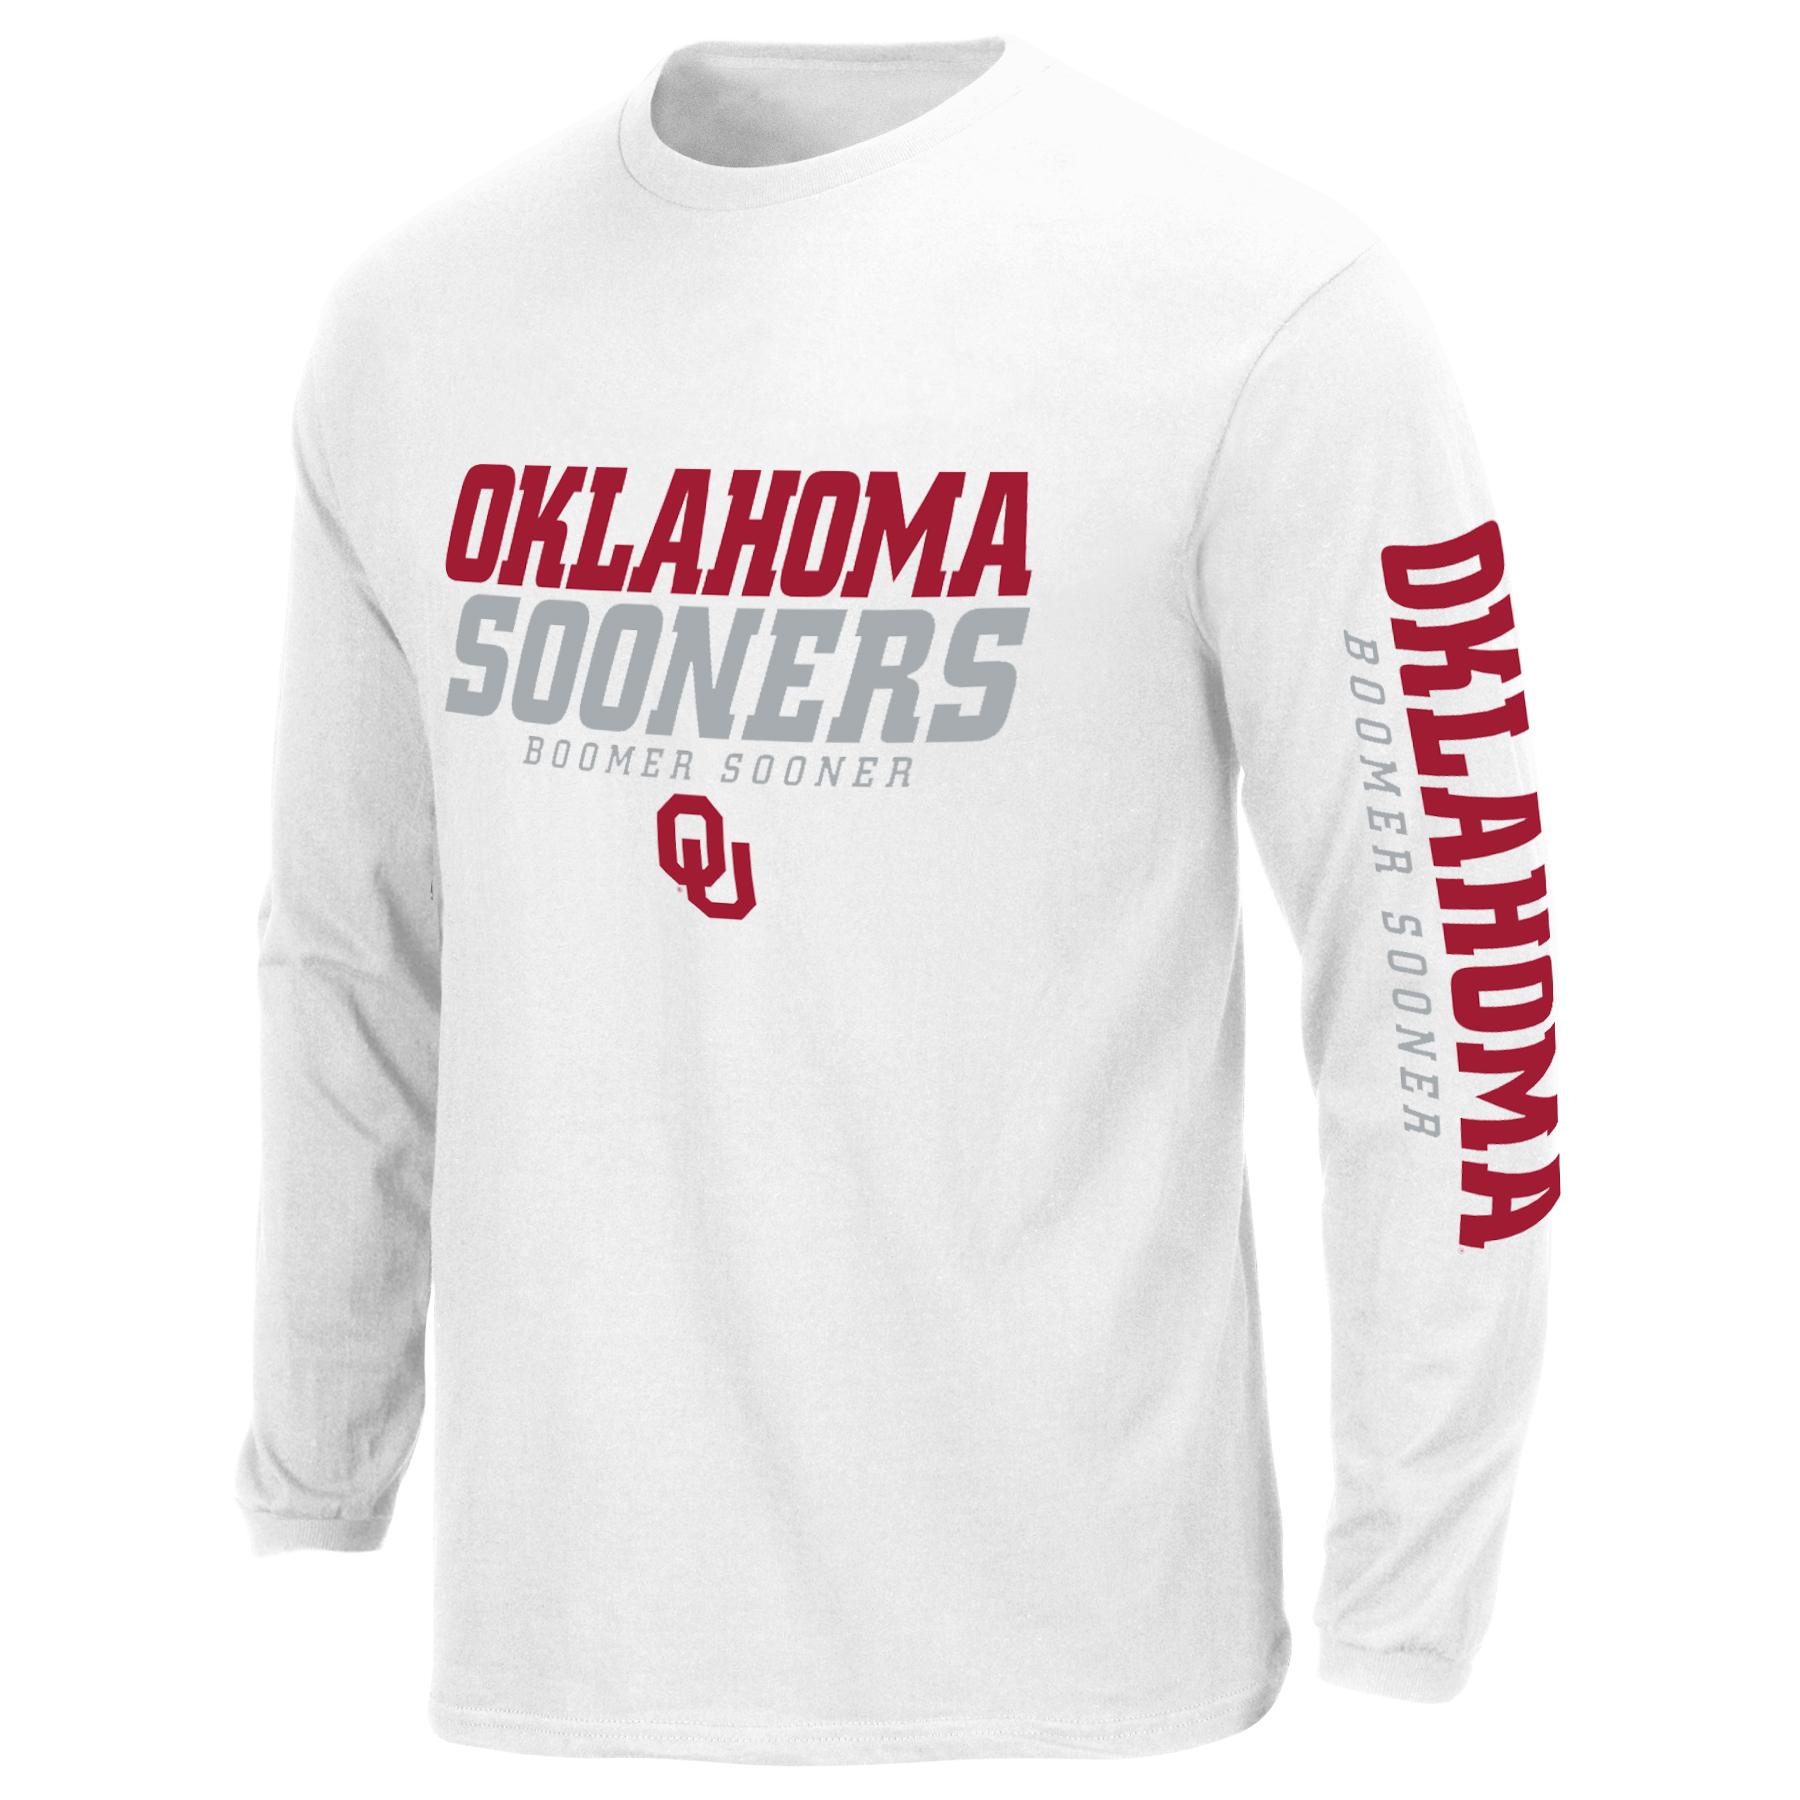 NCAA Men's Long-Sleeve T-Shirt - Oklahoma Sooners